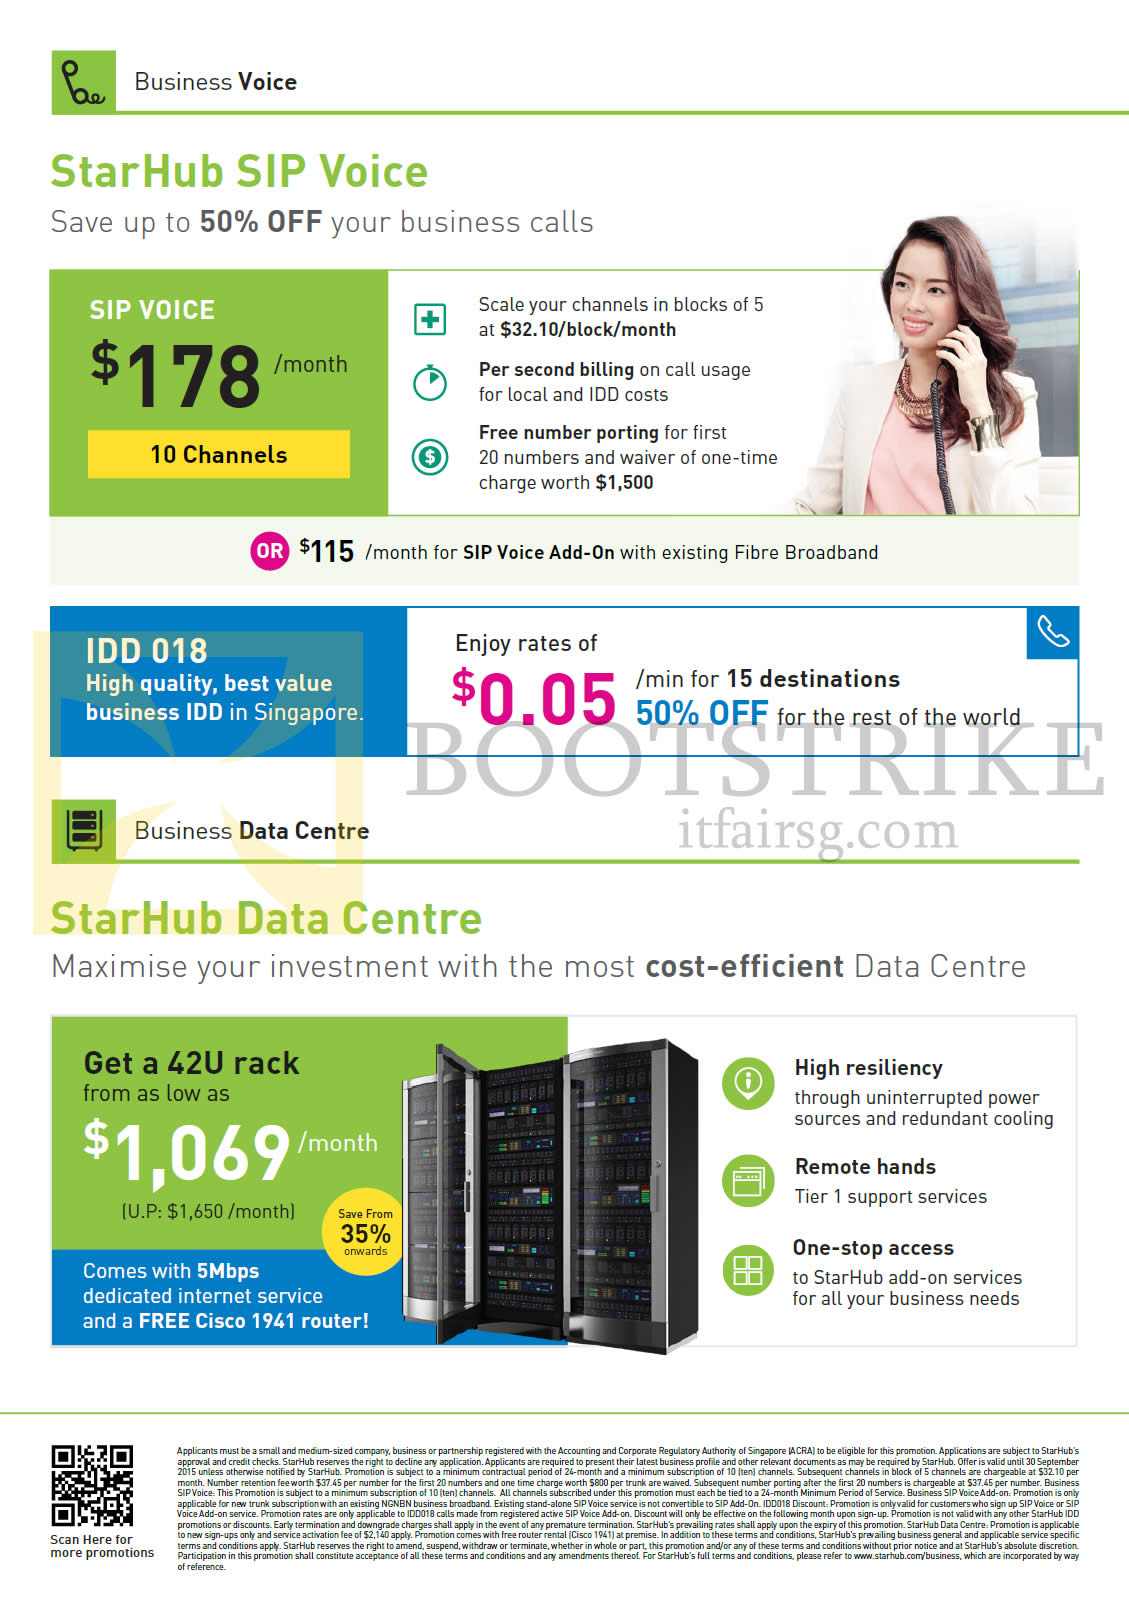 COMEX 2015 price list image brochure of Starhub Business SIP Voice, IDD 018, Data Centre 42U Rack